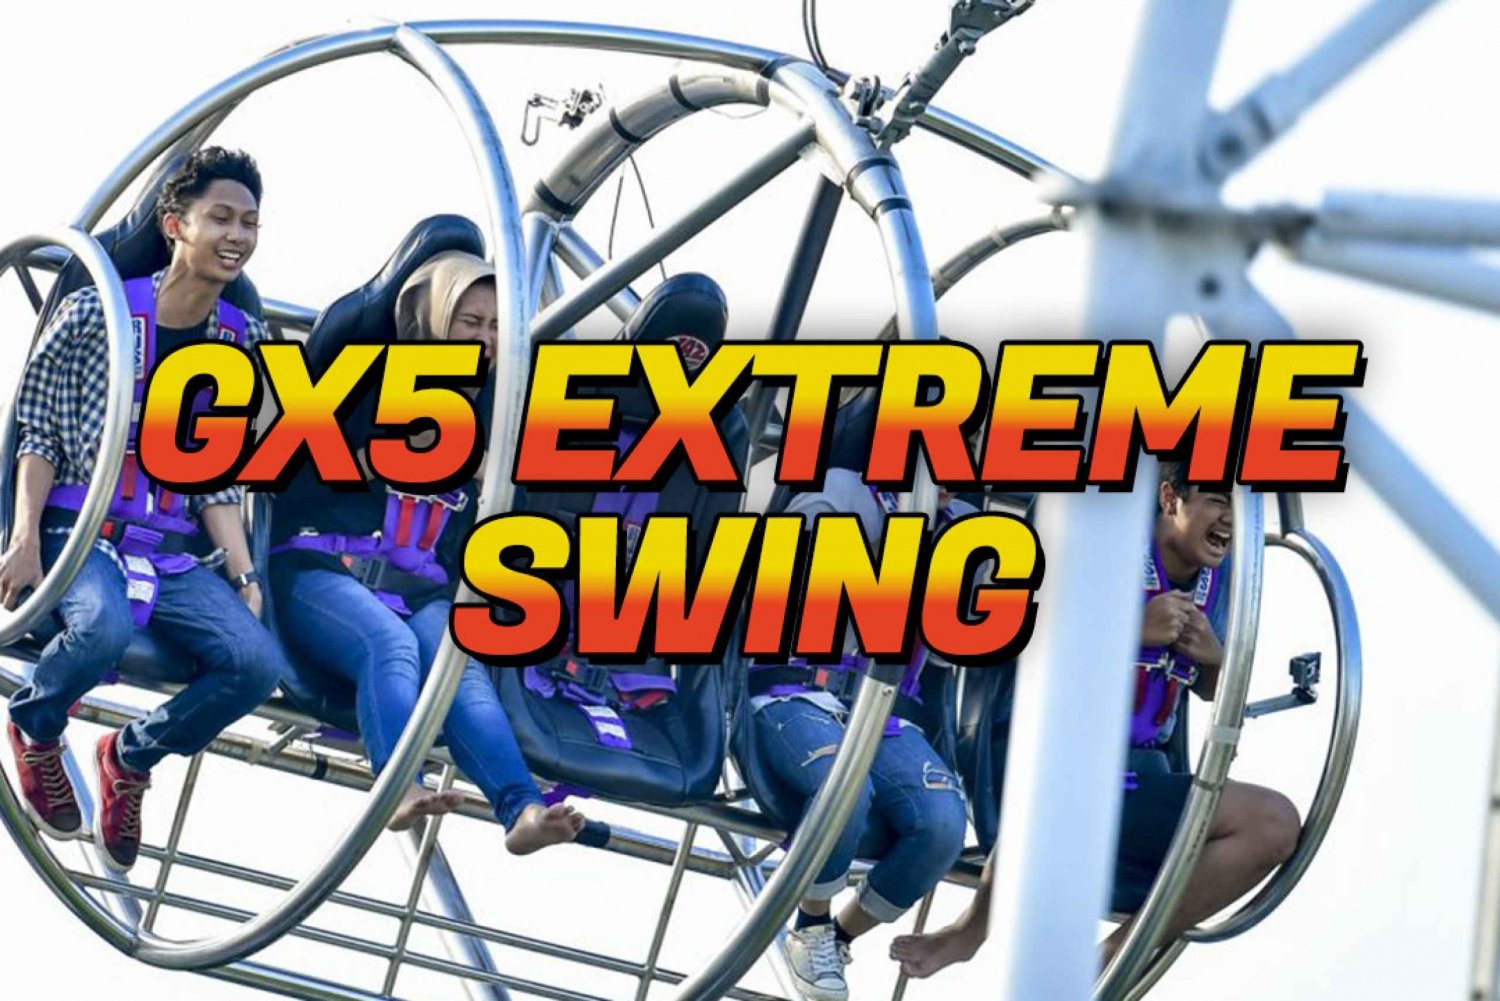 Singapore: GX5 Extreme Swing Entry Ticket